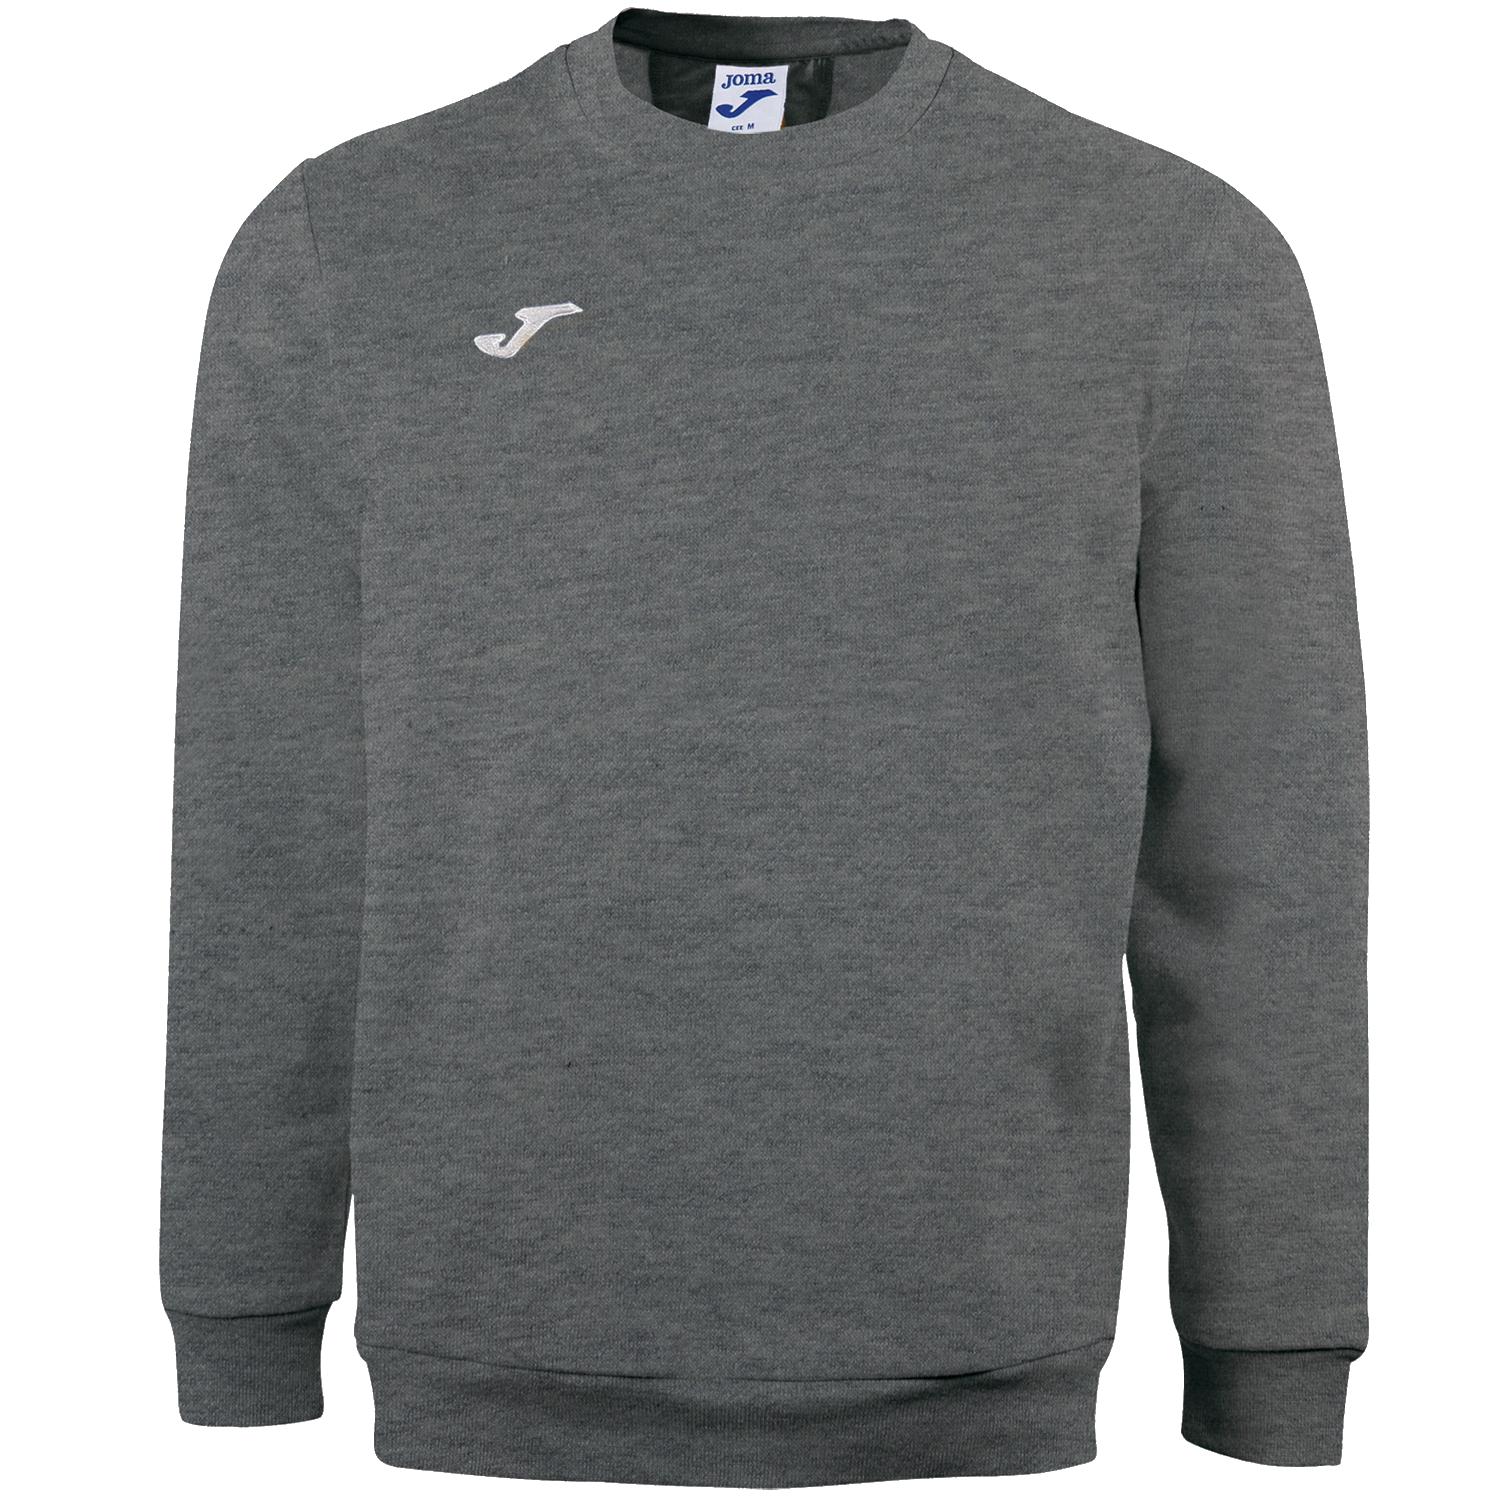 Joma Cairo II Sweatshirt, Mens grey Sweatshirt